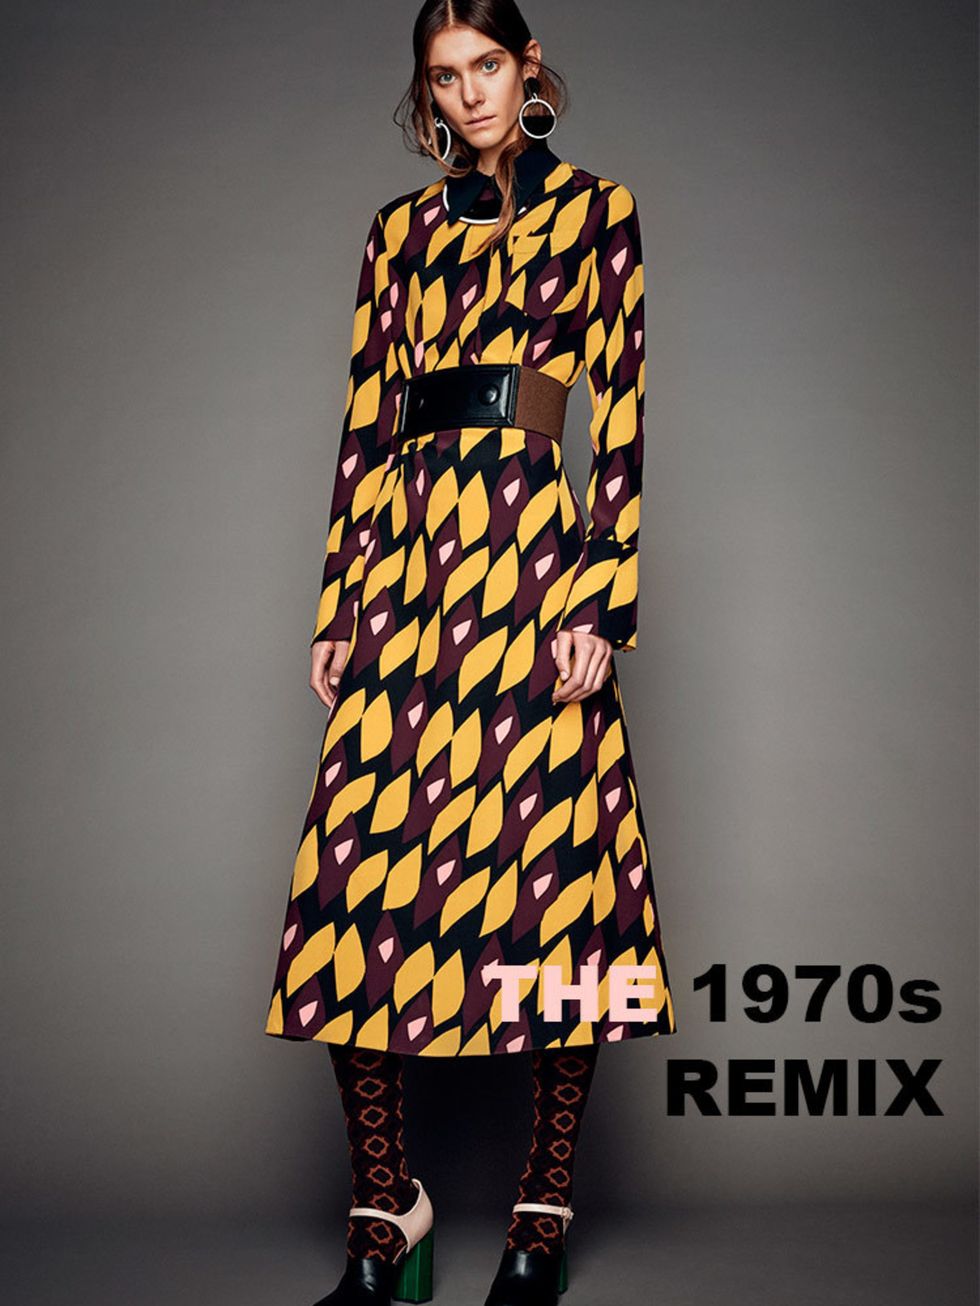 <p>The 1970's Remix</p>

<p>Marni Pre-Fall 2015</p>